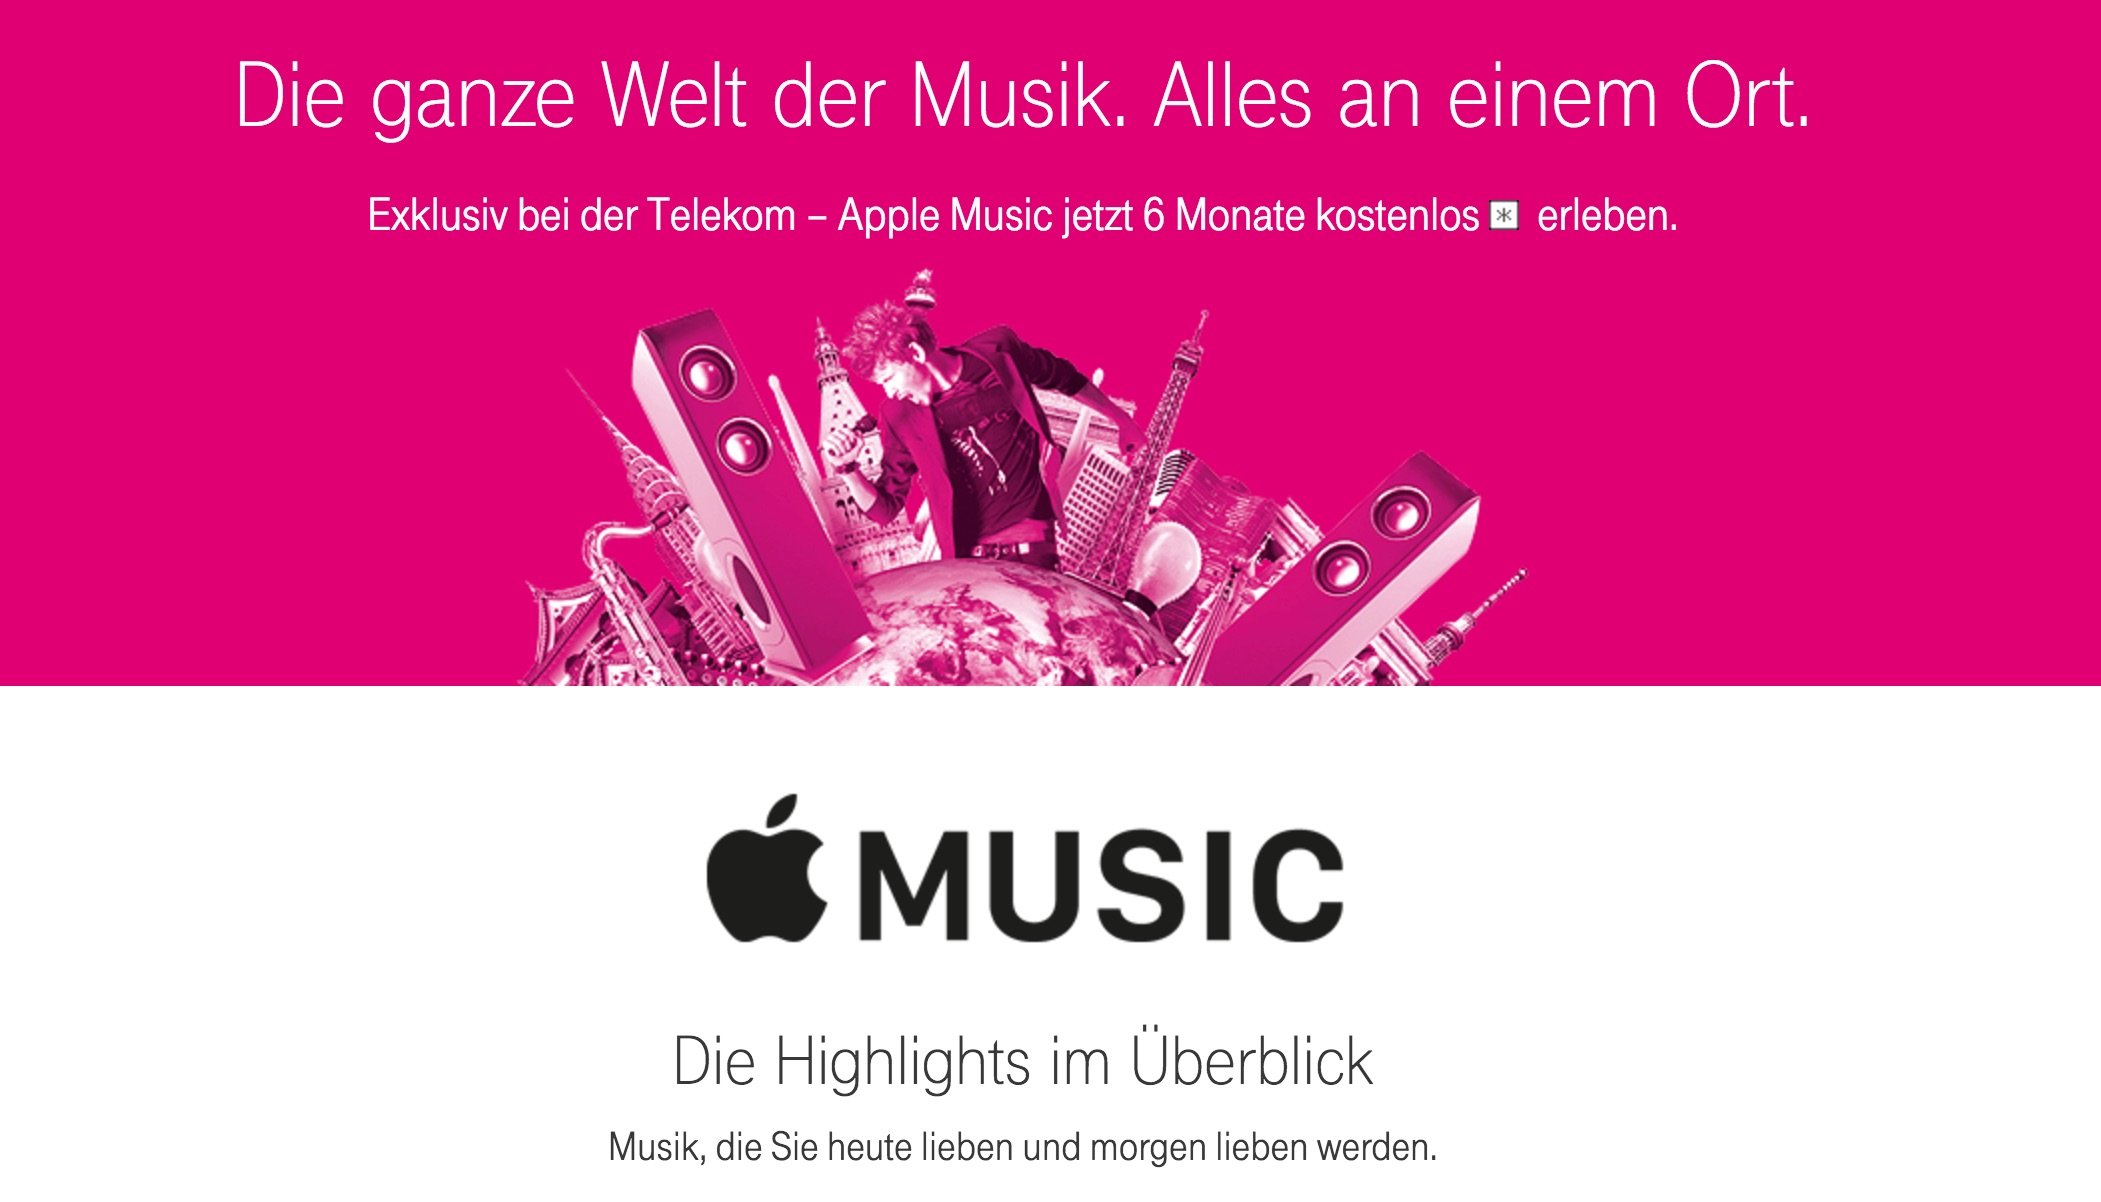 Apple Music: 6 Monate kostenlos bei Telekom 2